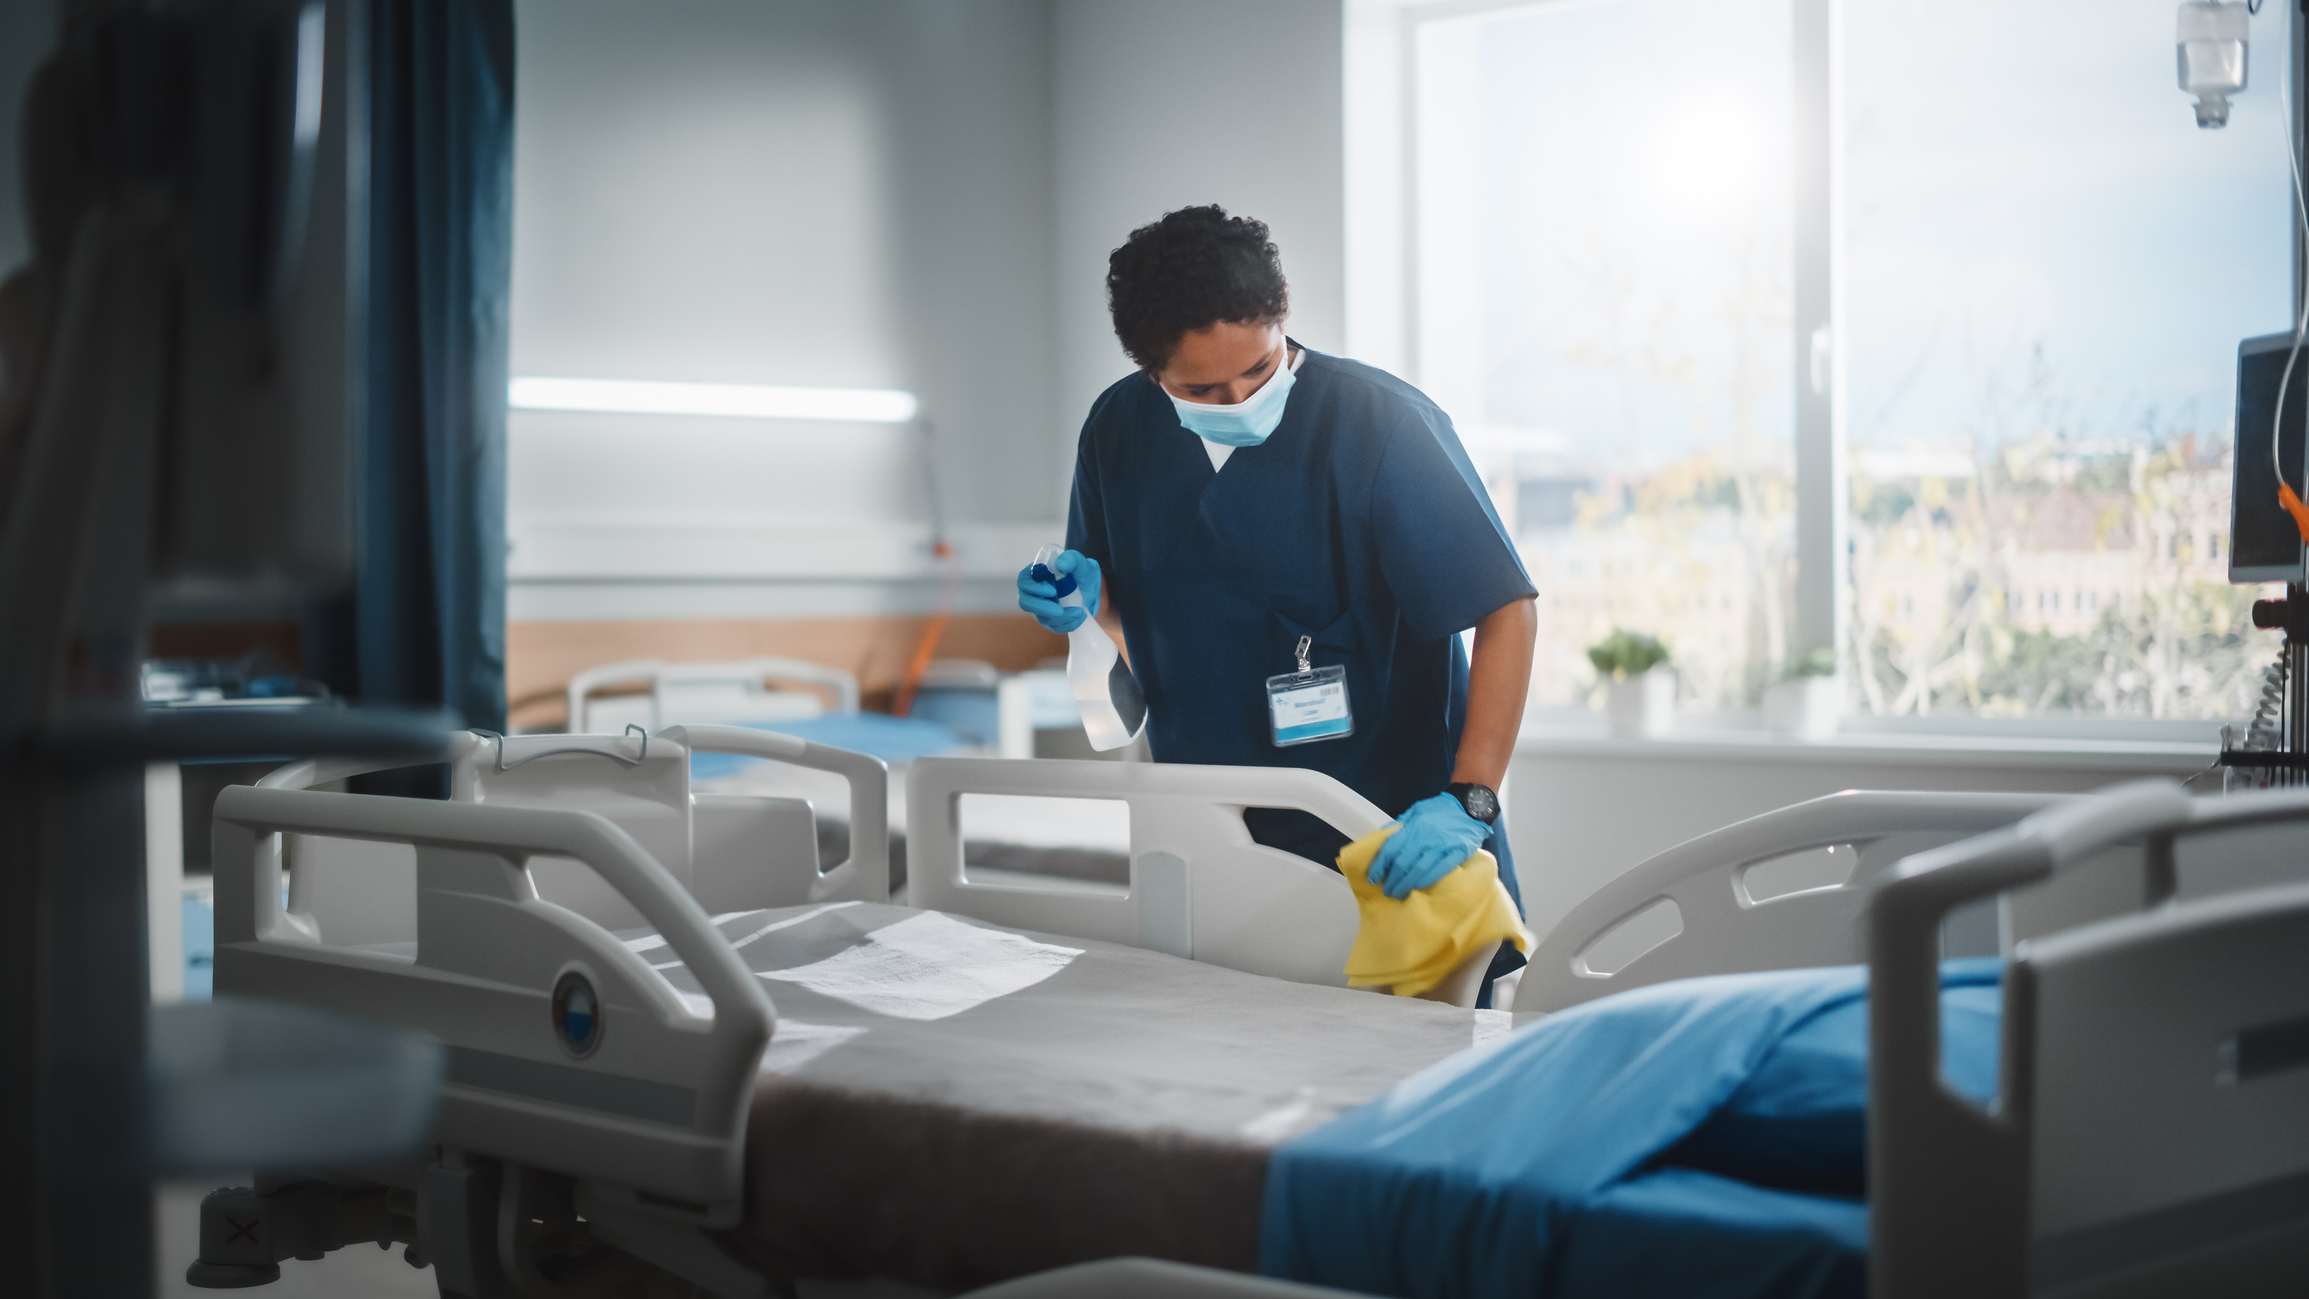 Hospital room hygiene lacking among facilities worldwide, survey finds